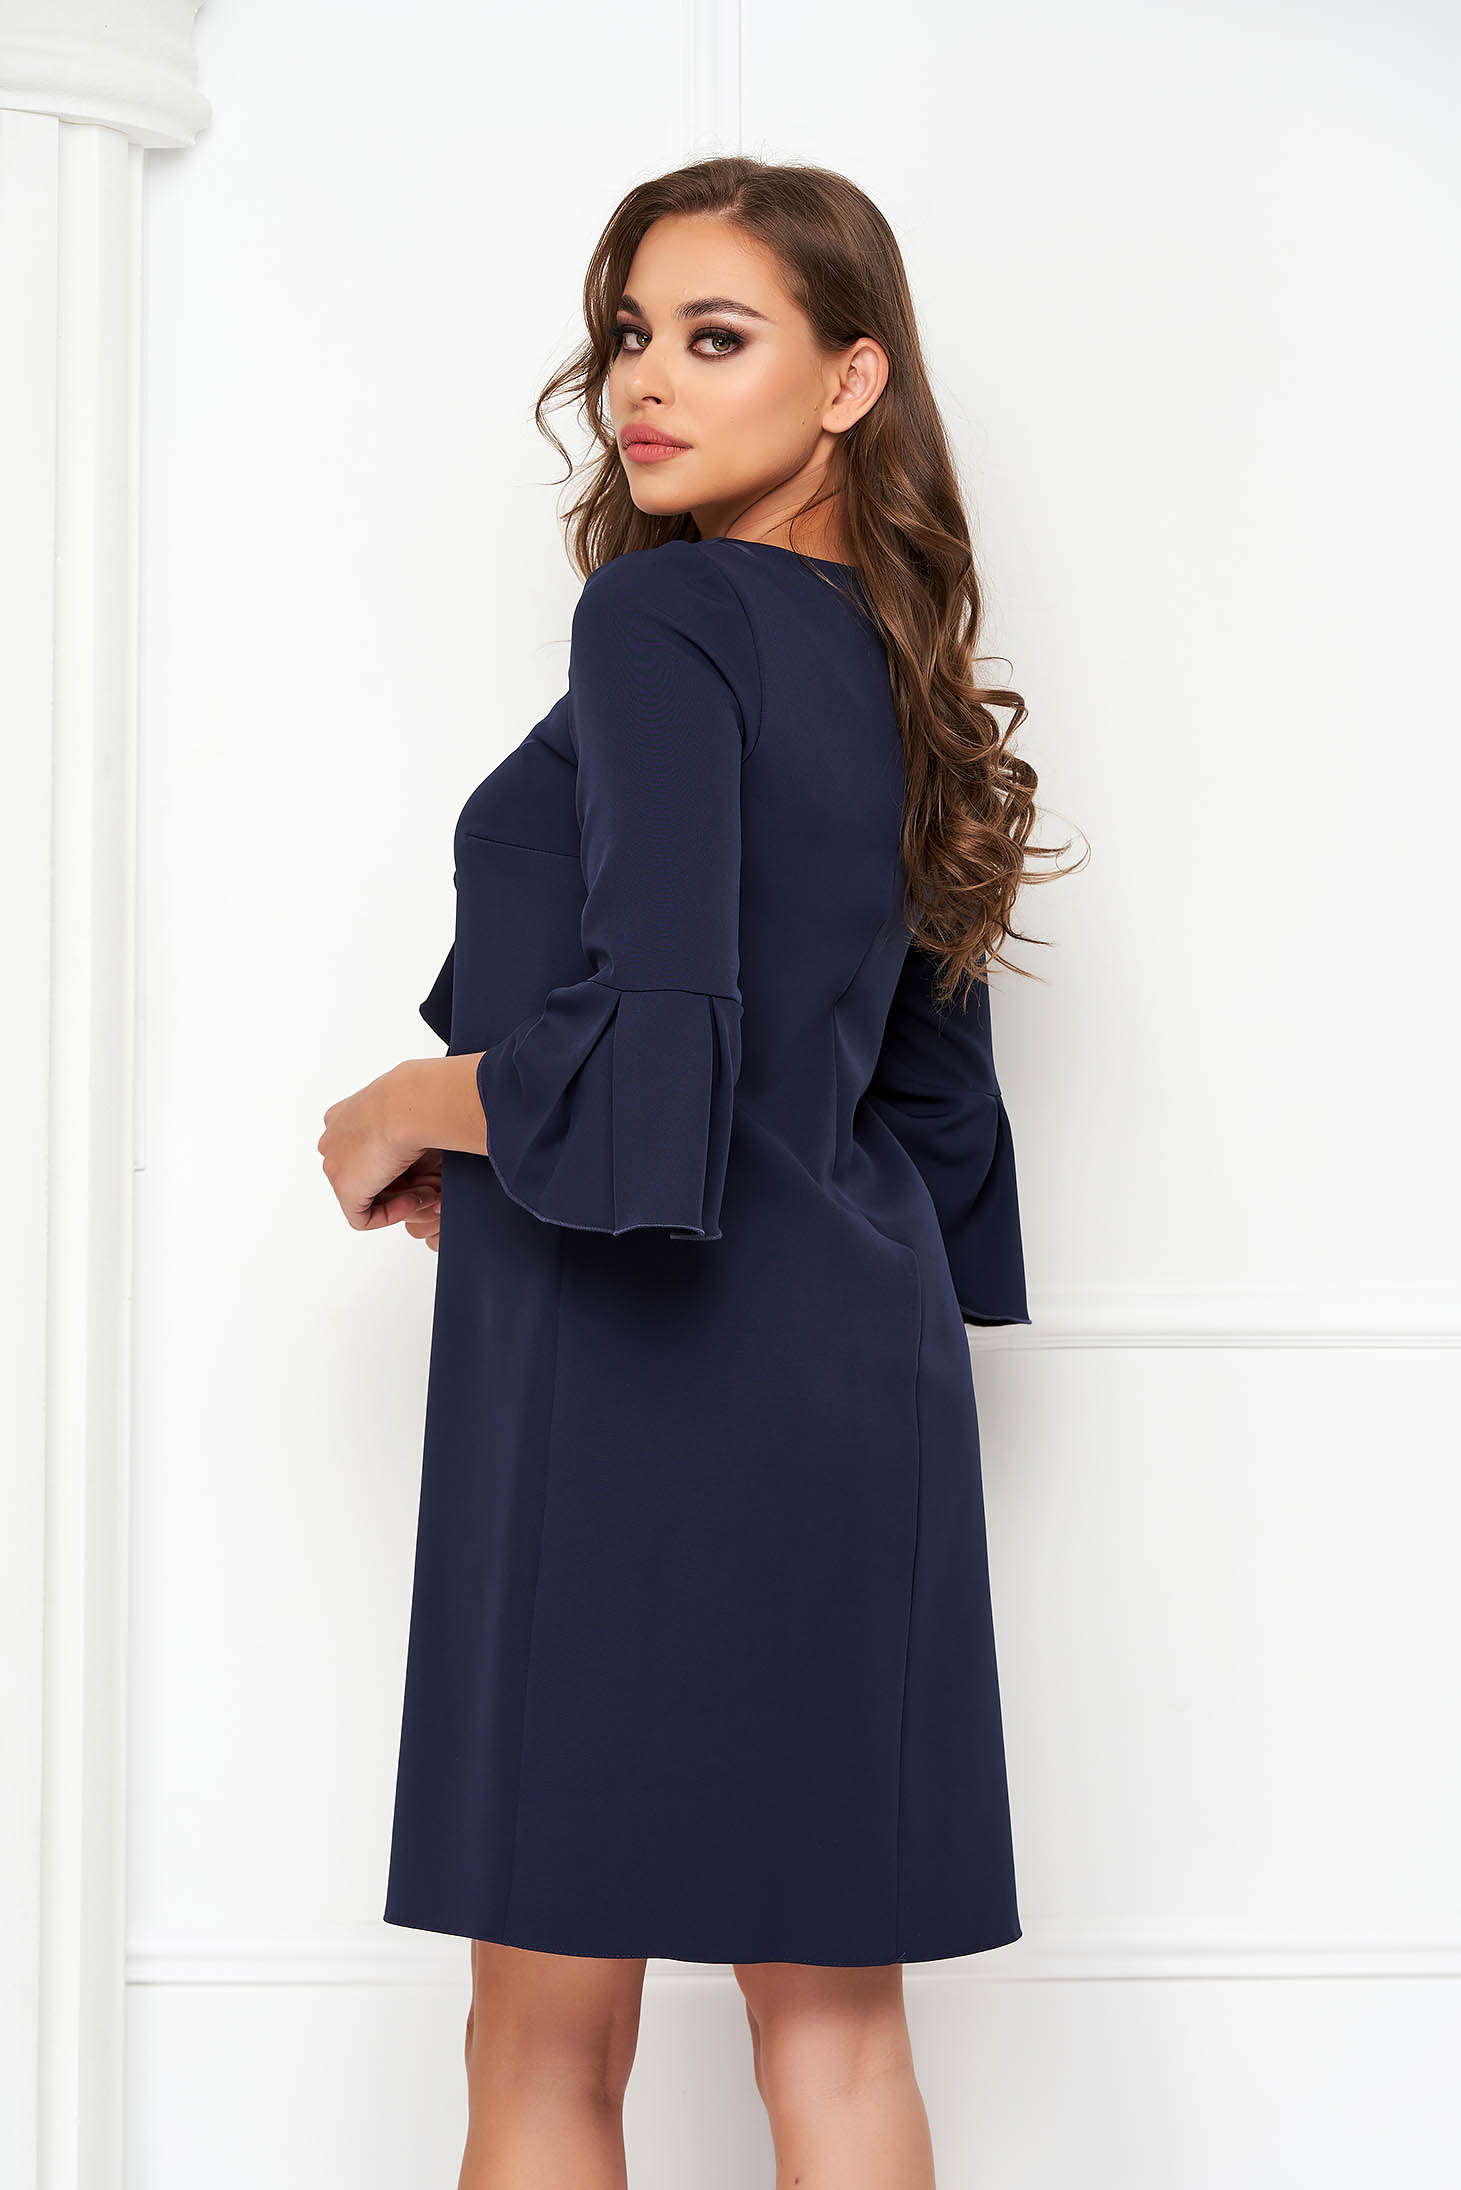 Dark blue dress slightly elastic fabric short cut loose fit with ruffle details - StarShinerS 2 - StarShinerS.com